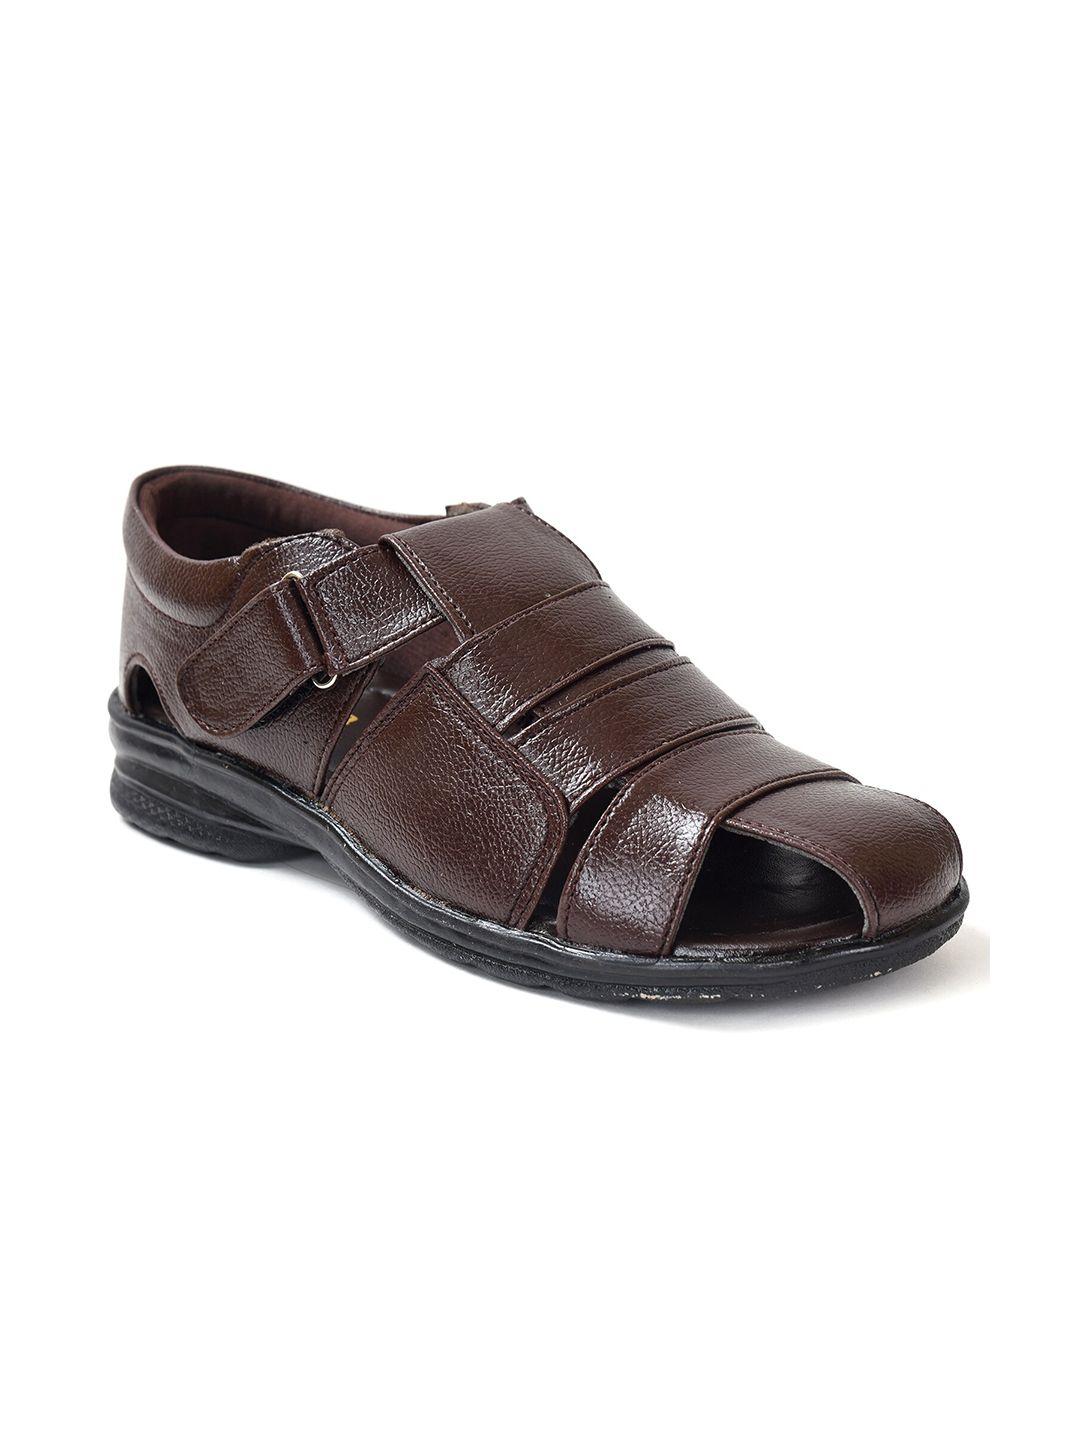 ajanta-men-brown-shoe-style-sandals